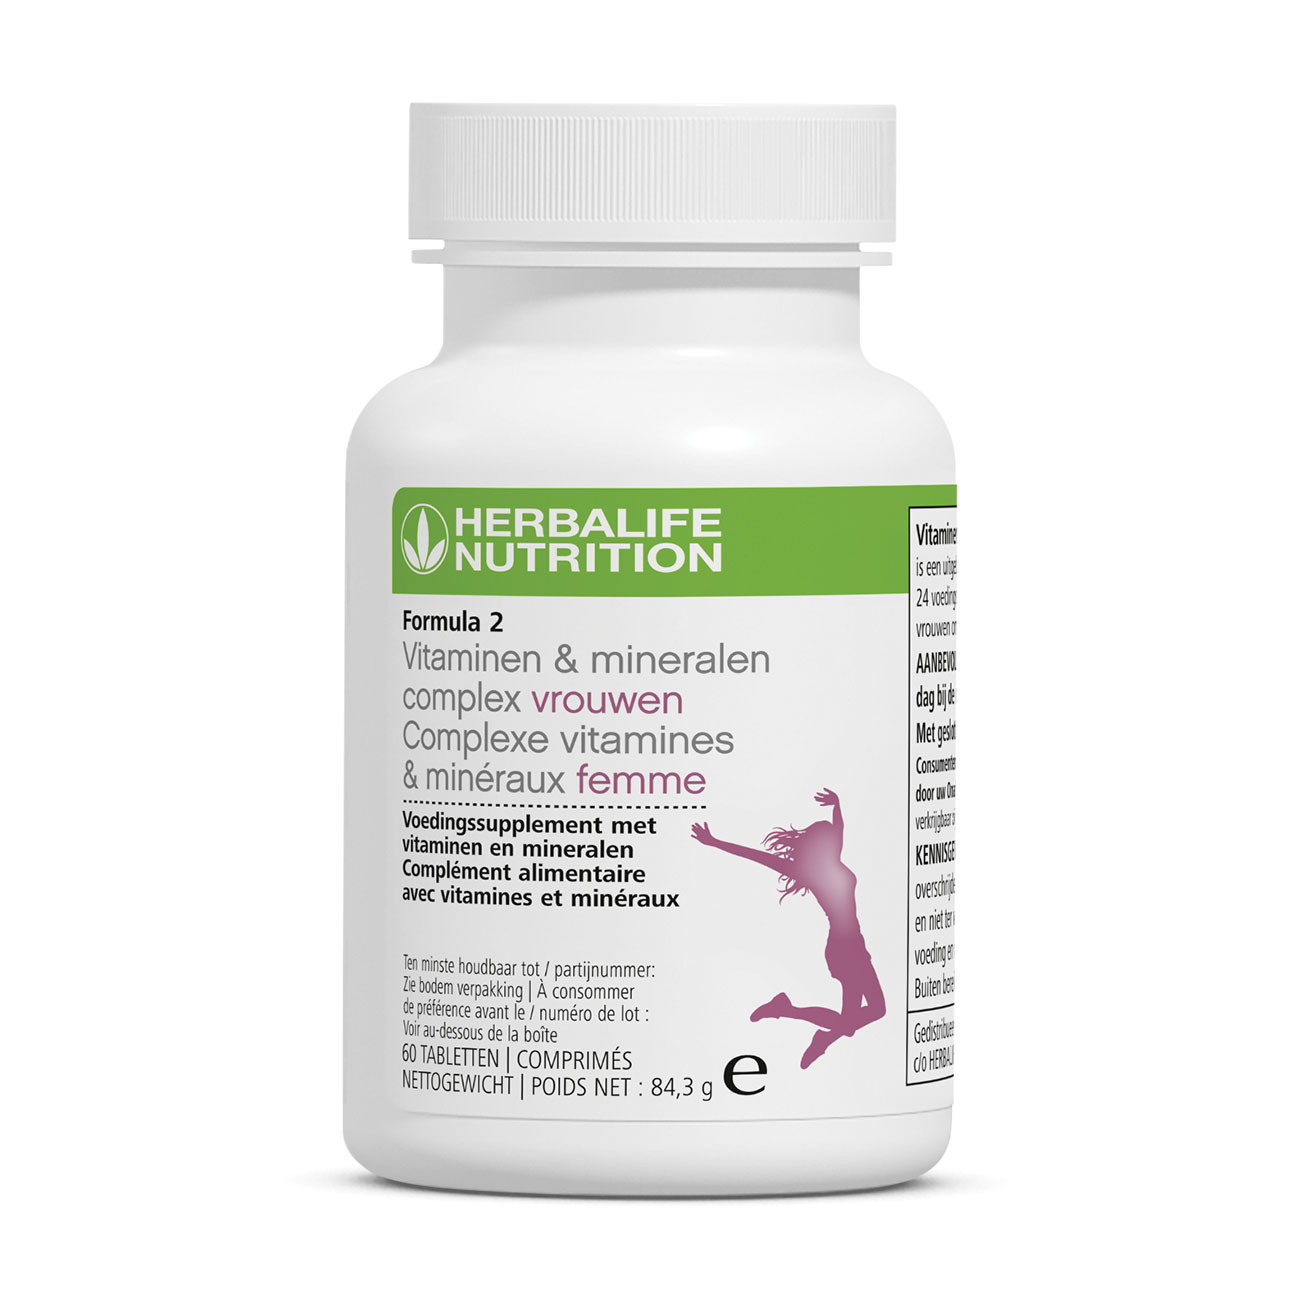 Formula 2 Vitaminen & mineralencomplex vrouwen multivitaminen supplement product shot